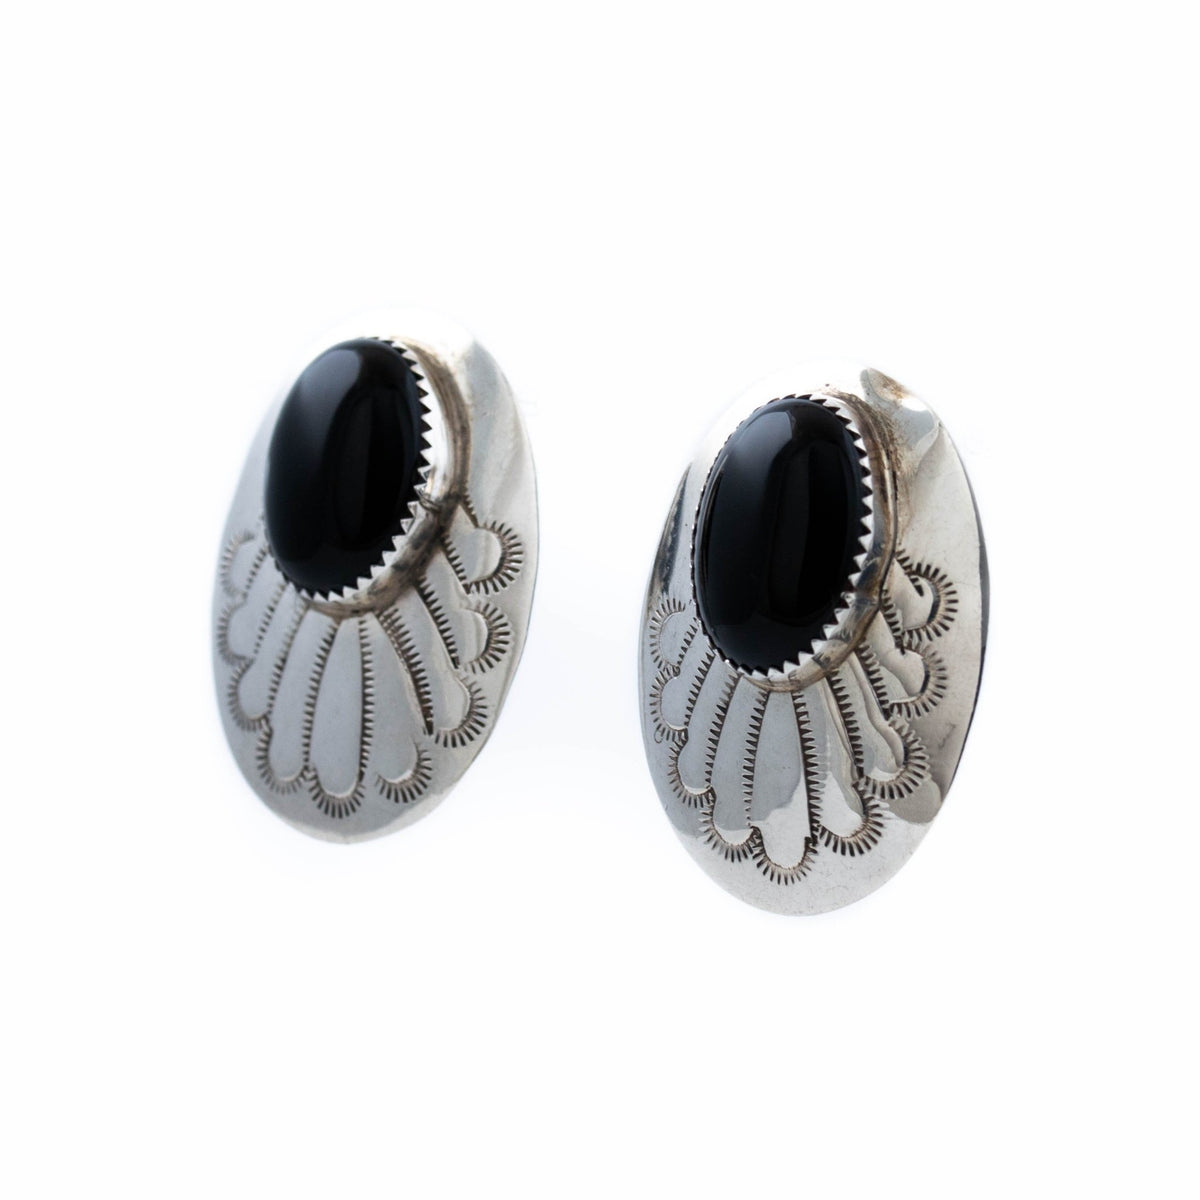 Oval Stamped Onyx Earrings - Kingdom Jewelry